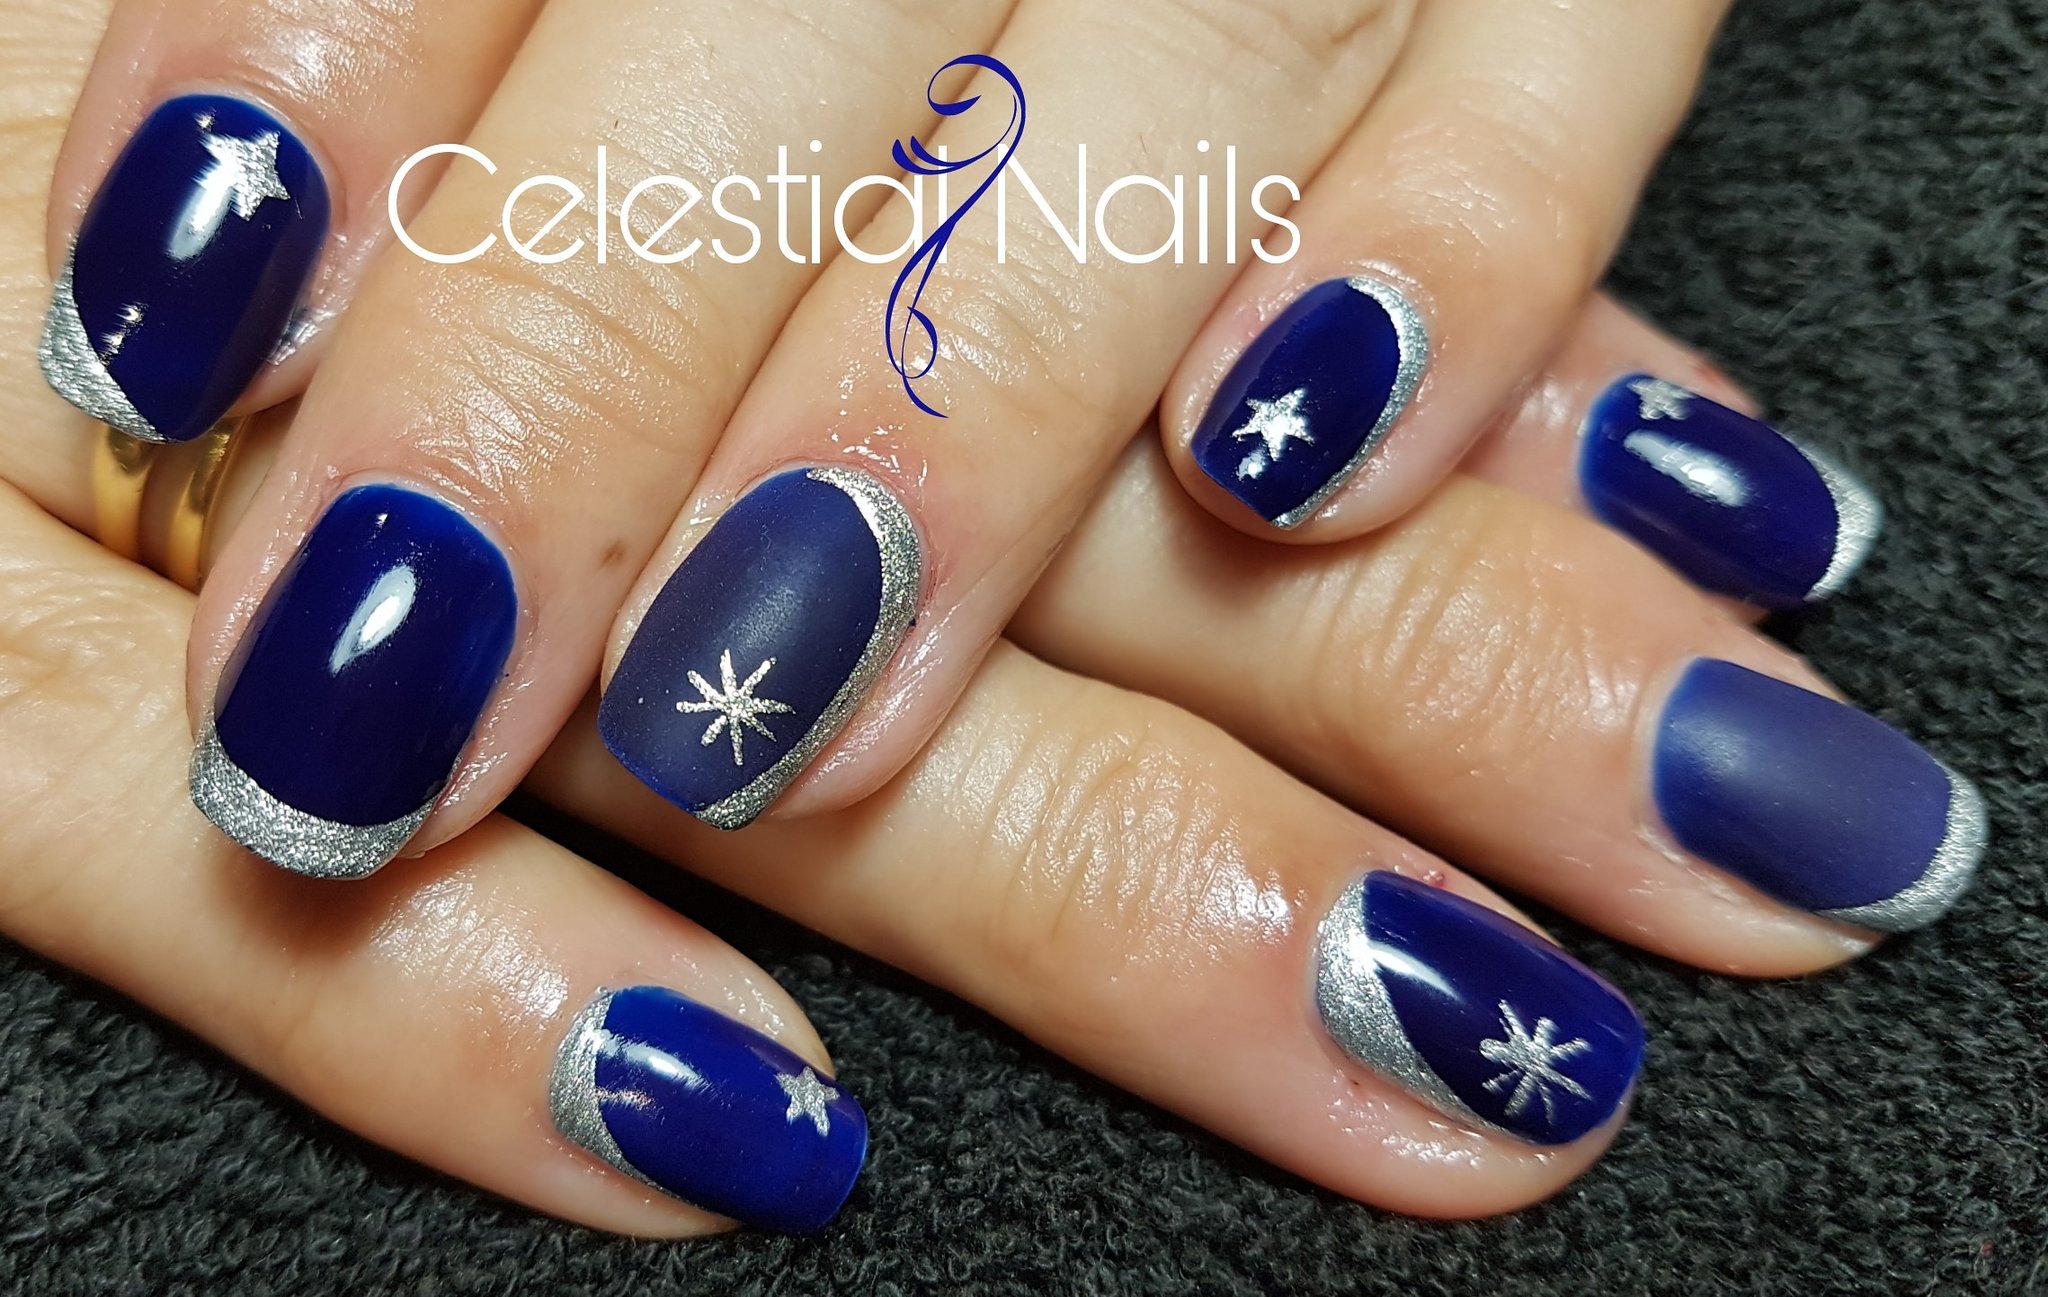 توییتر \ Julie Merritt در توییتر: «Navy gel polish on natural nails with a  silver freehand star design 💗💅 #celestialnails #nailtech #naturalnails  #nofilters #blue #navyblue #silver #gelpolish #matt #mattnails #bluesky  #picsart #insta #